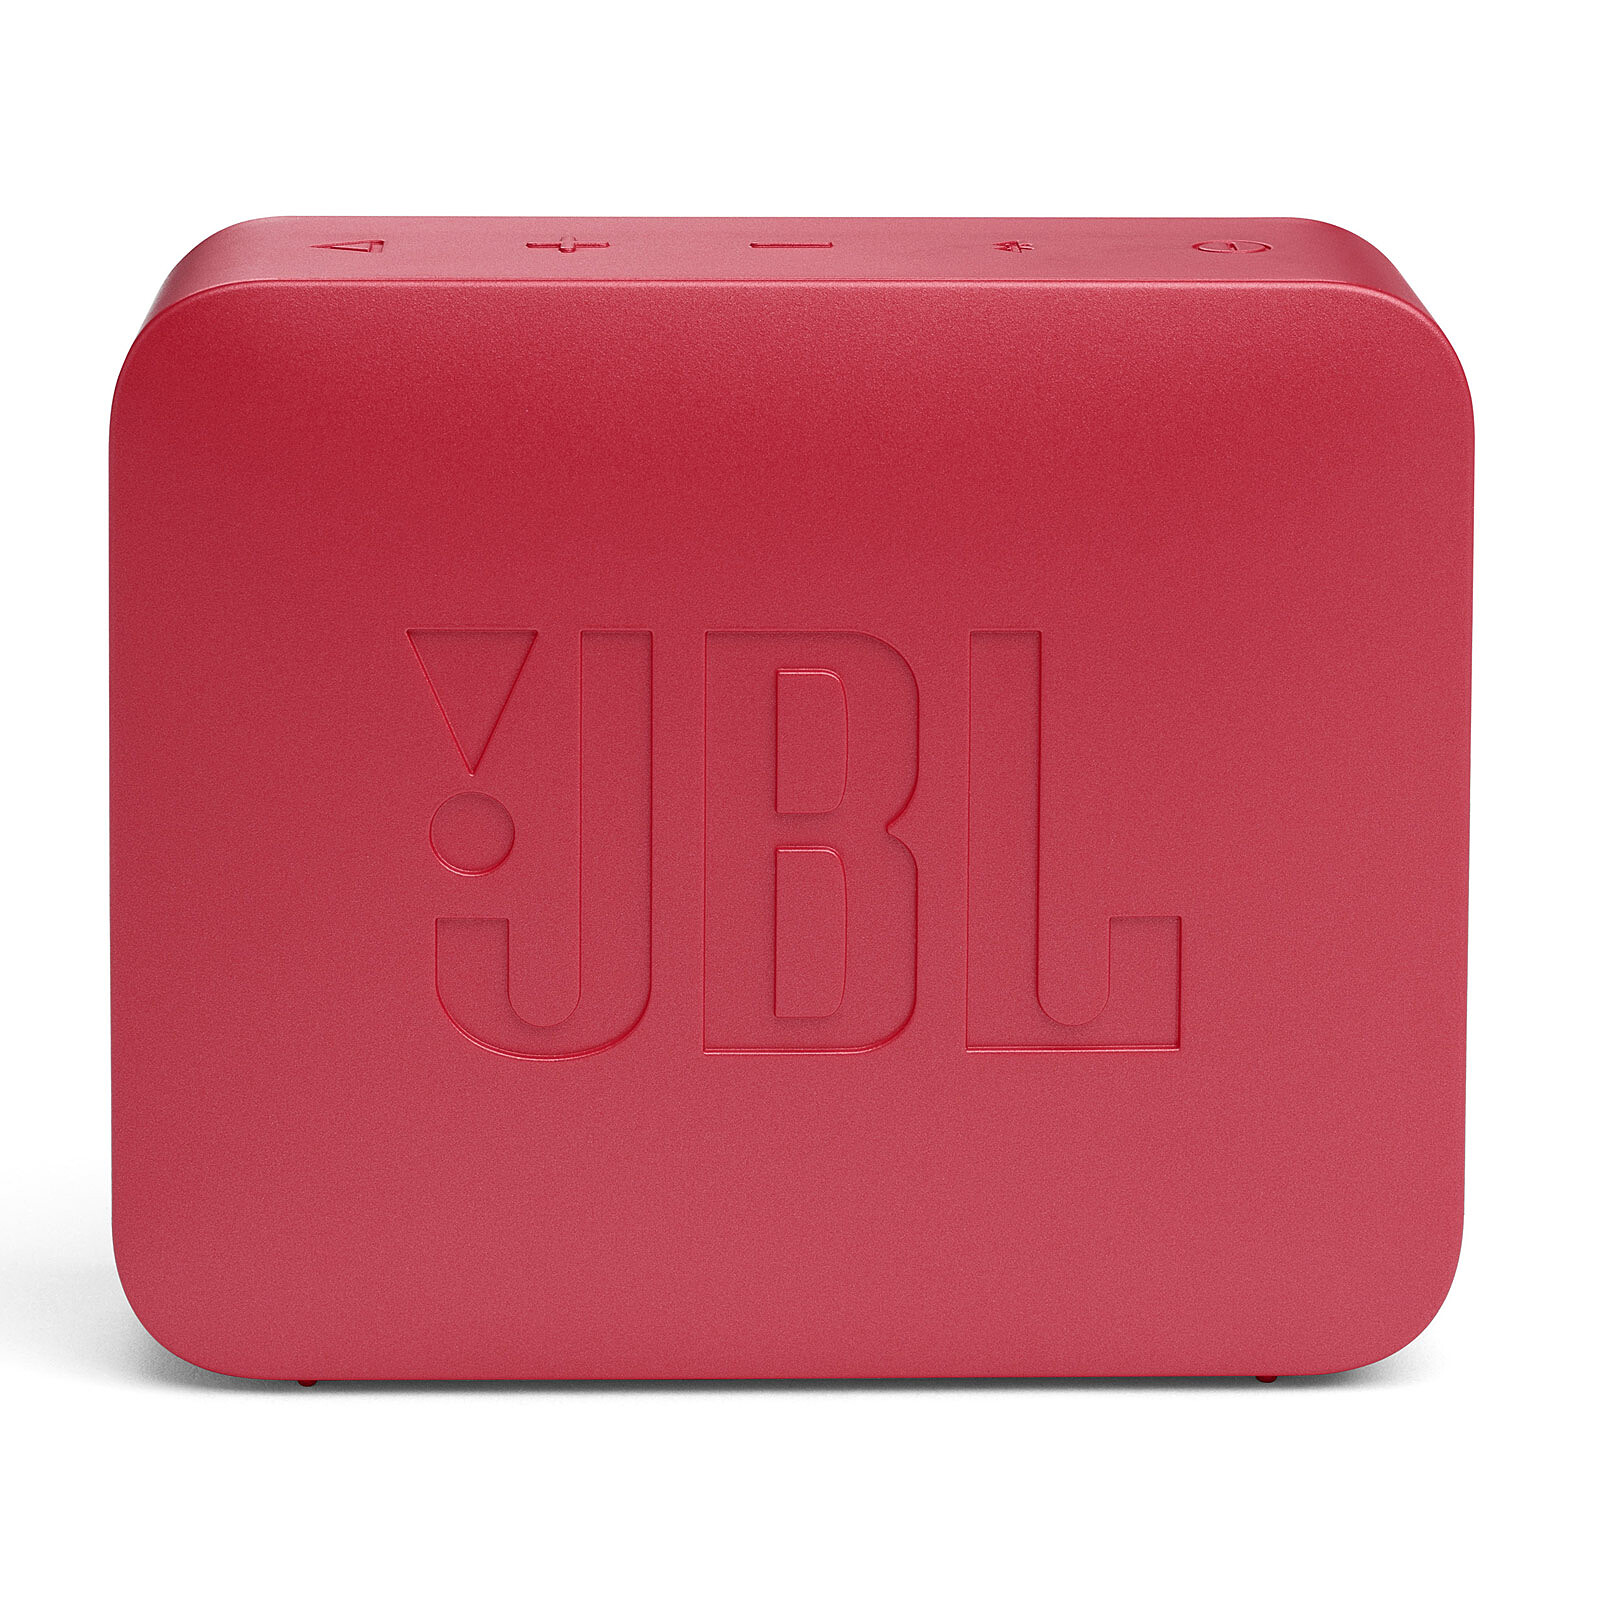 Altavoz inalámbrico  JBL Go Essential, 3.1 W, Bluetooth 4.2, Hasta 5  horas, IPX7, Negro